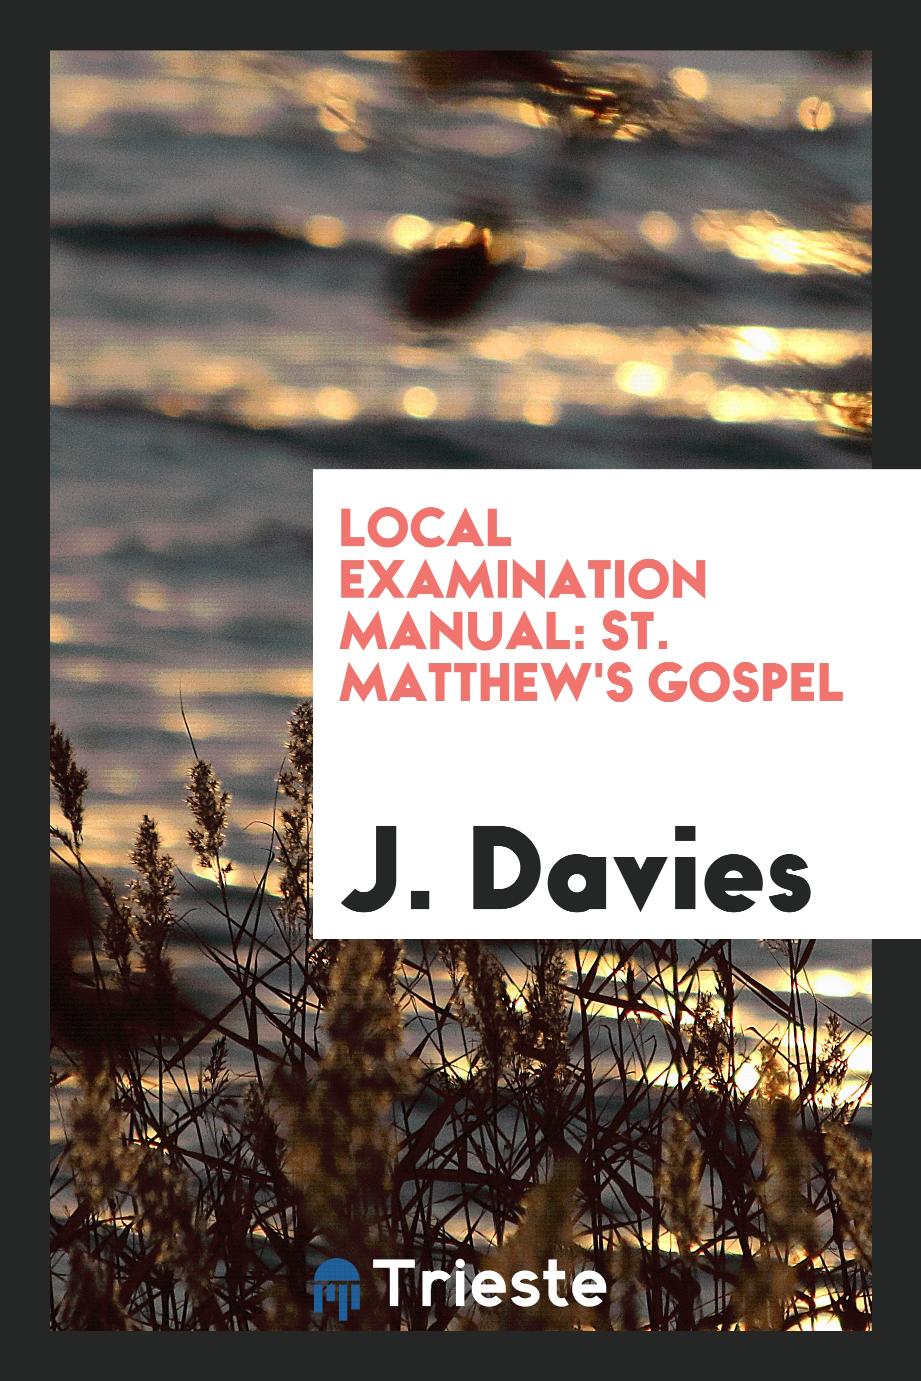 Local Examination Manual: St. Matthew's Gospel